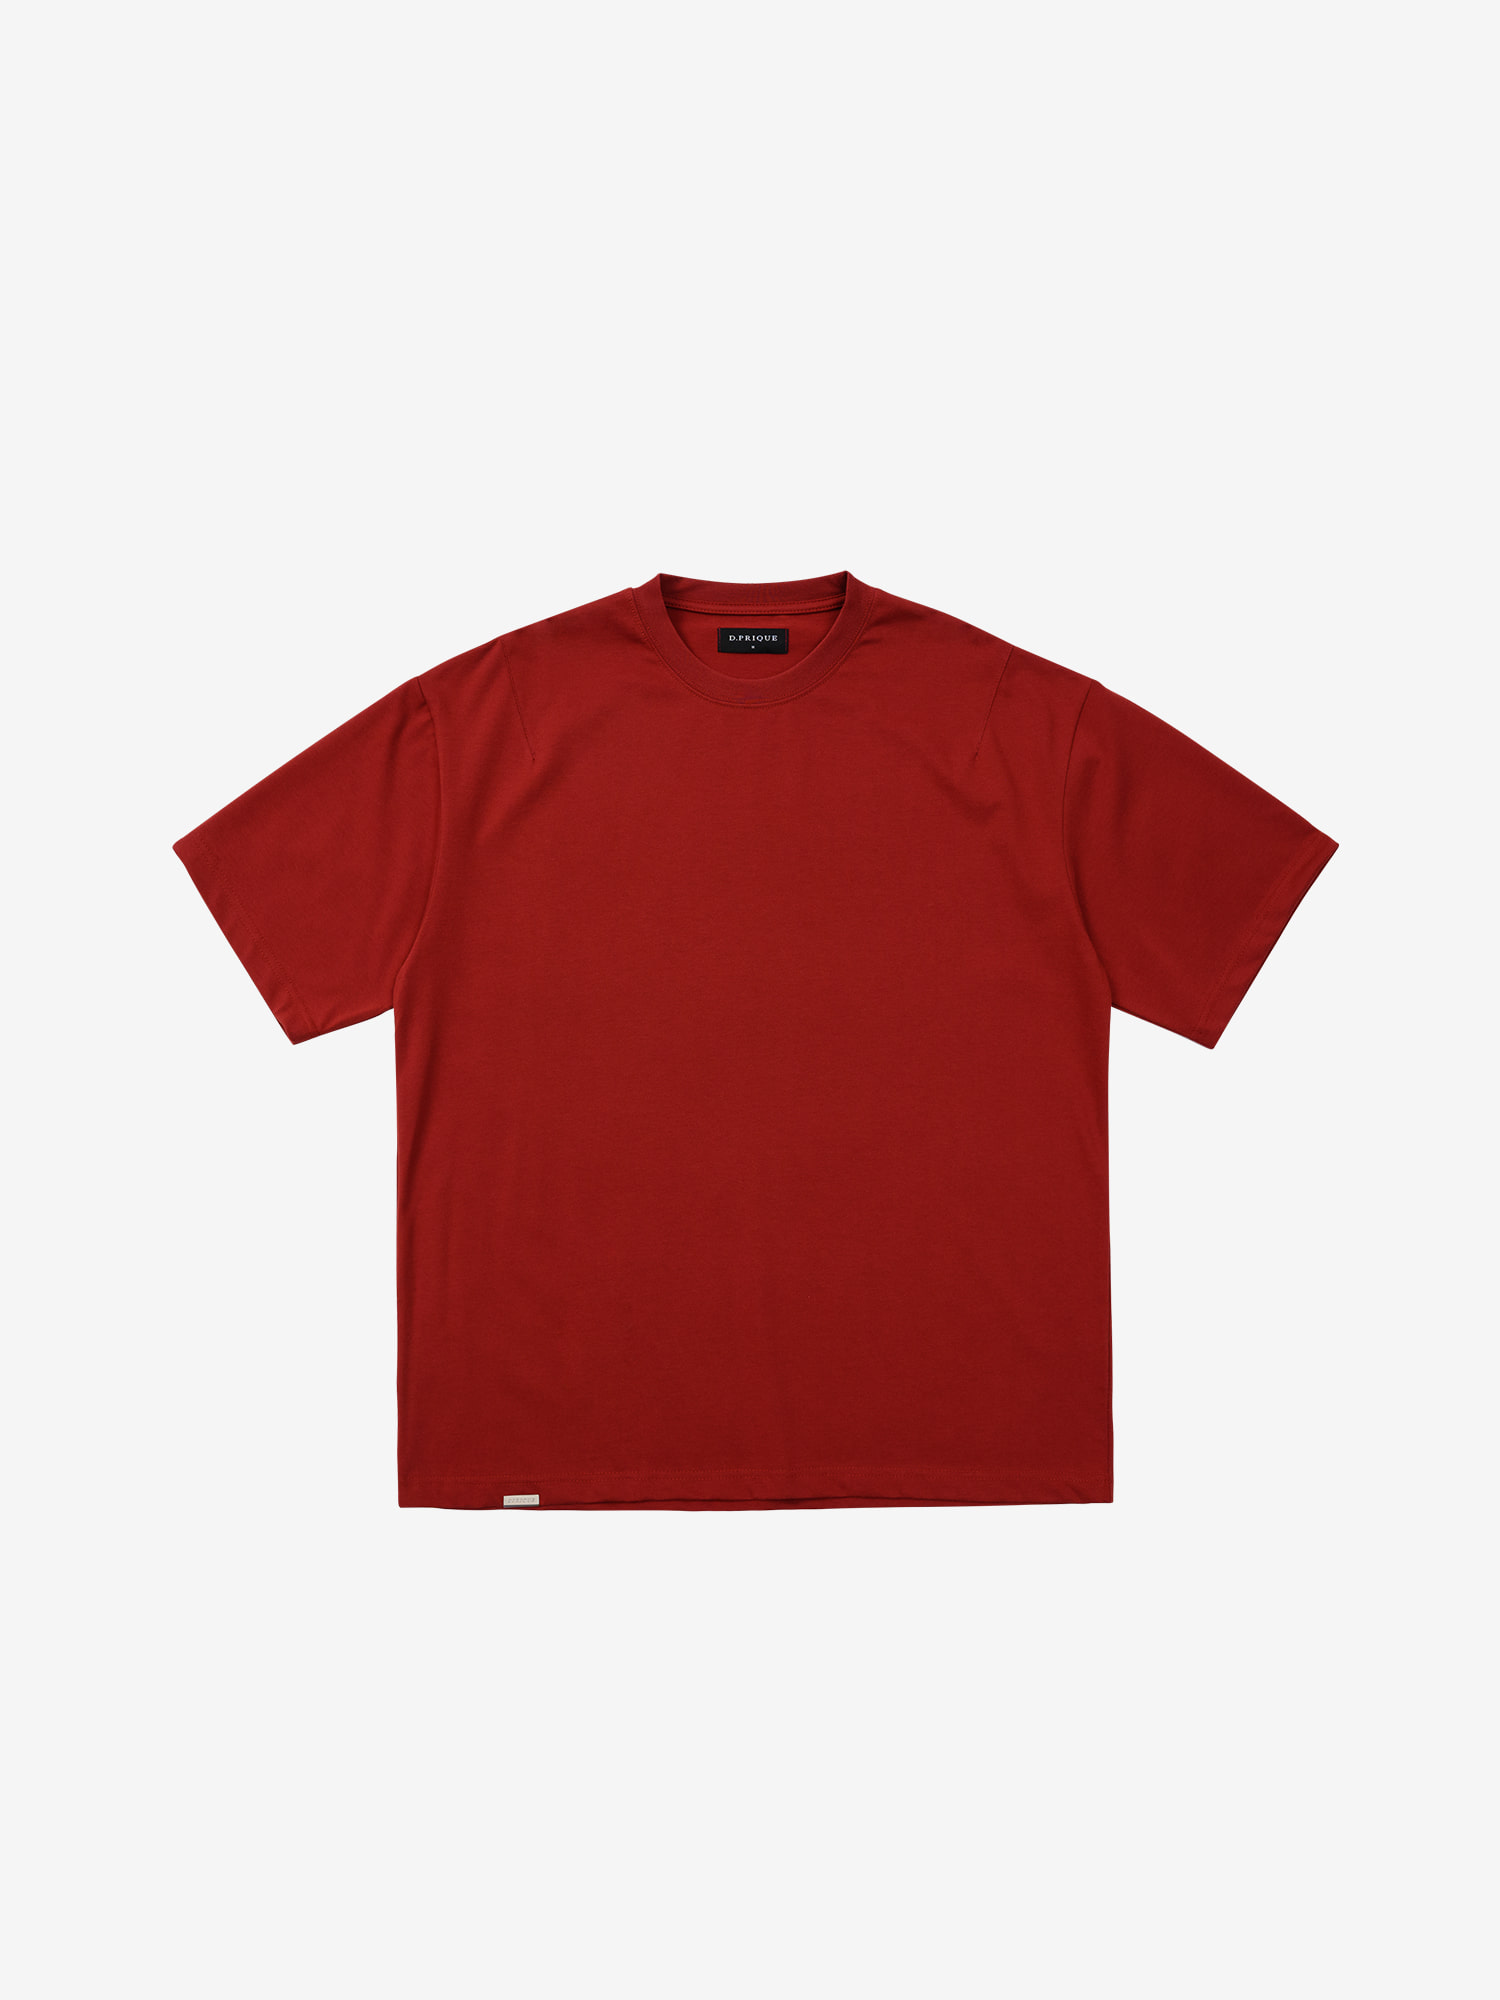 Classic Cotton T-Shirt - Deep Red